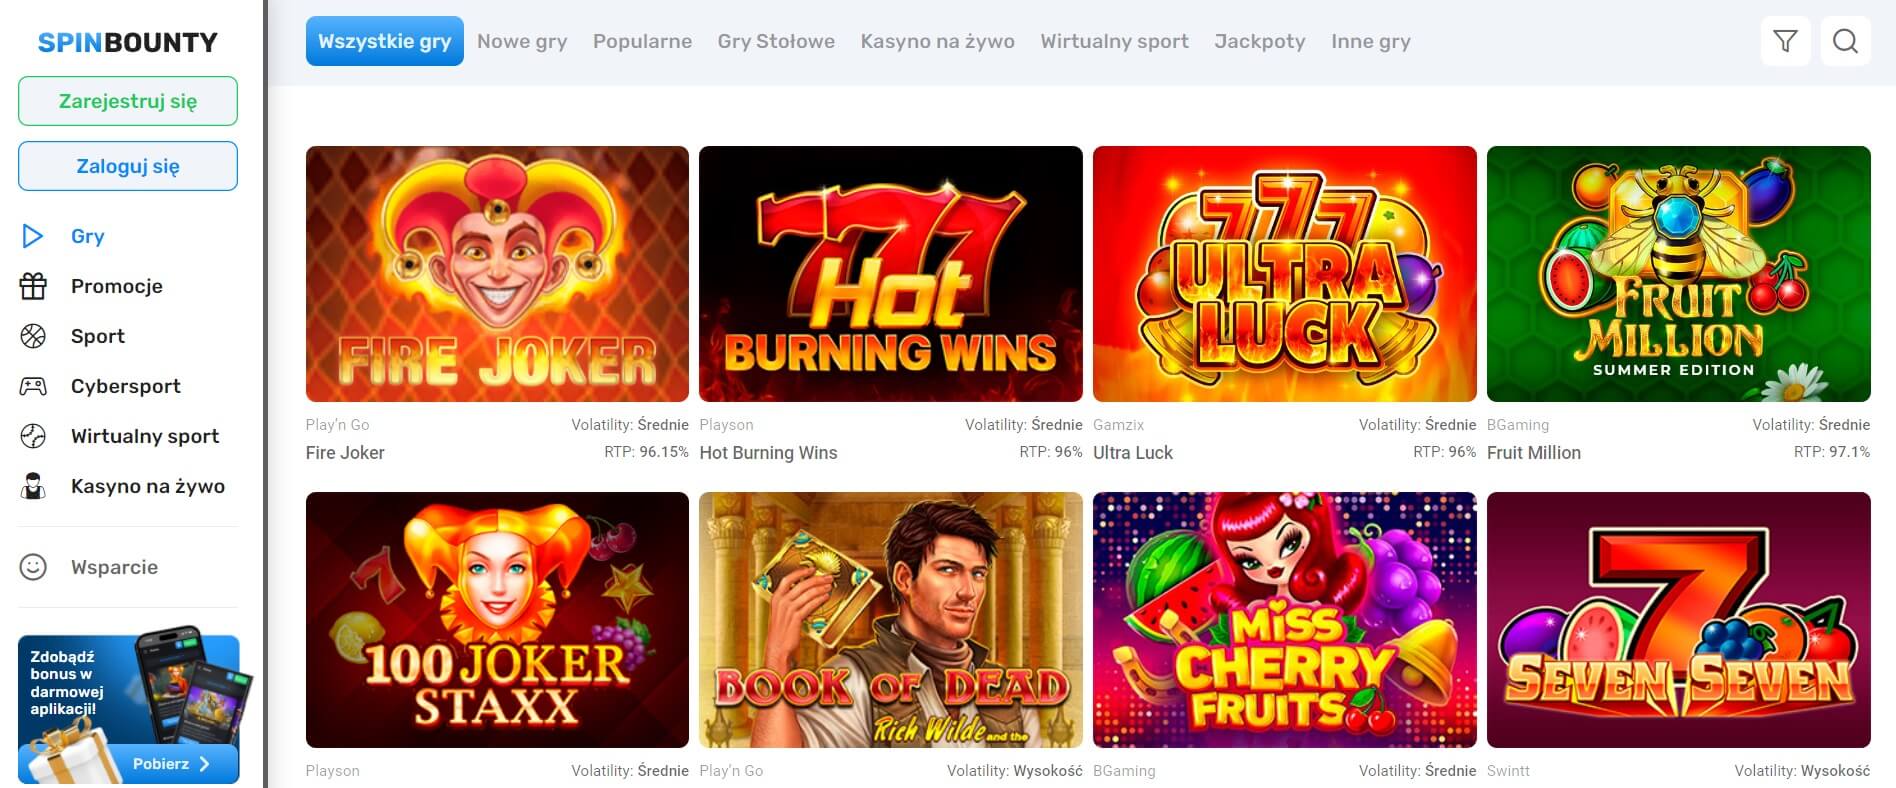 SpinBounty gry hazardowe screenshot